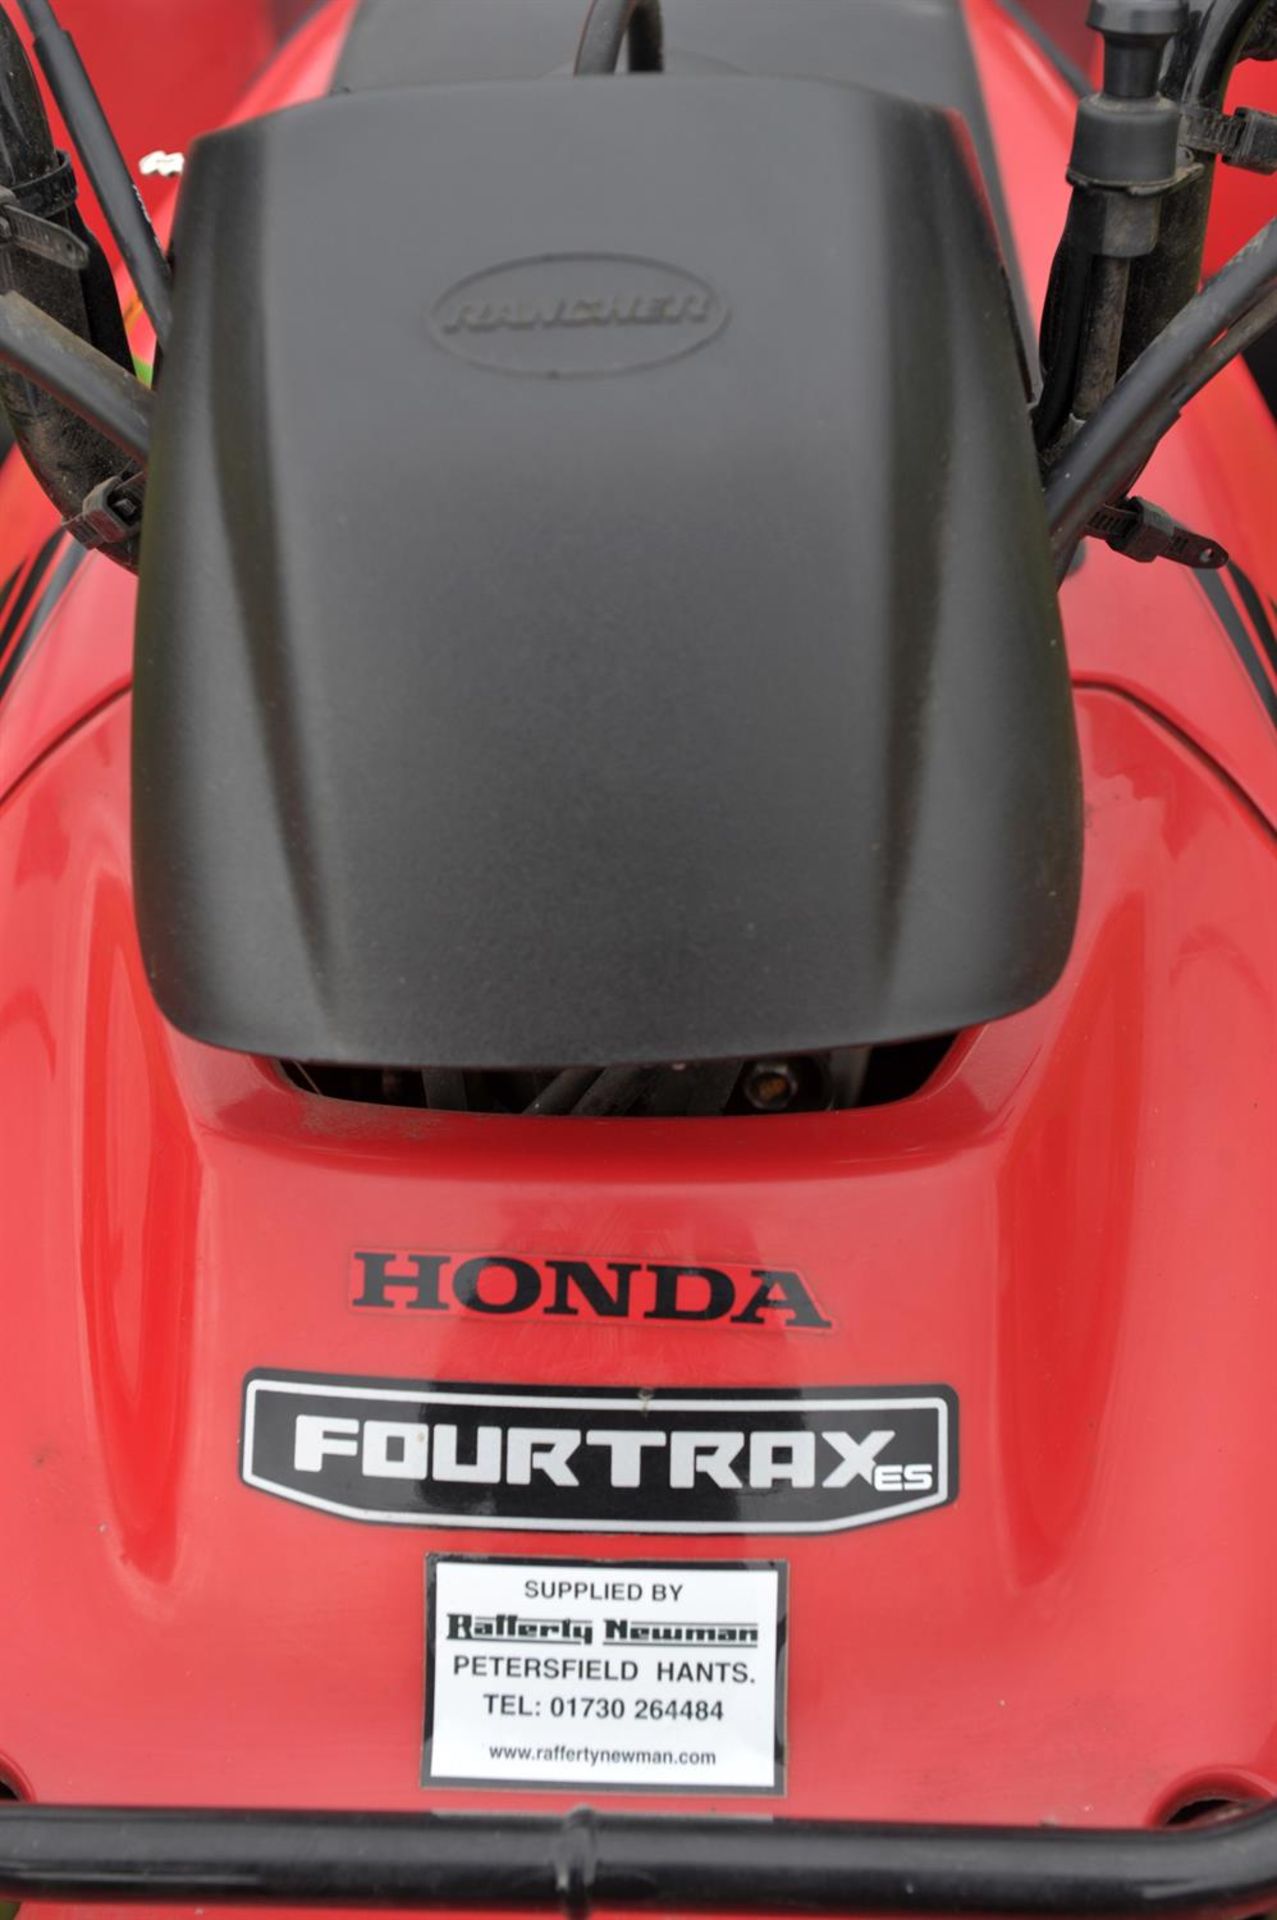 Honda Quad Bike ATV - TRX 250 TEM. Red. 250cc. - All wheel drive Honda Quad bike - One owner quad - Image 9 of 19